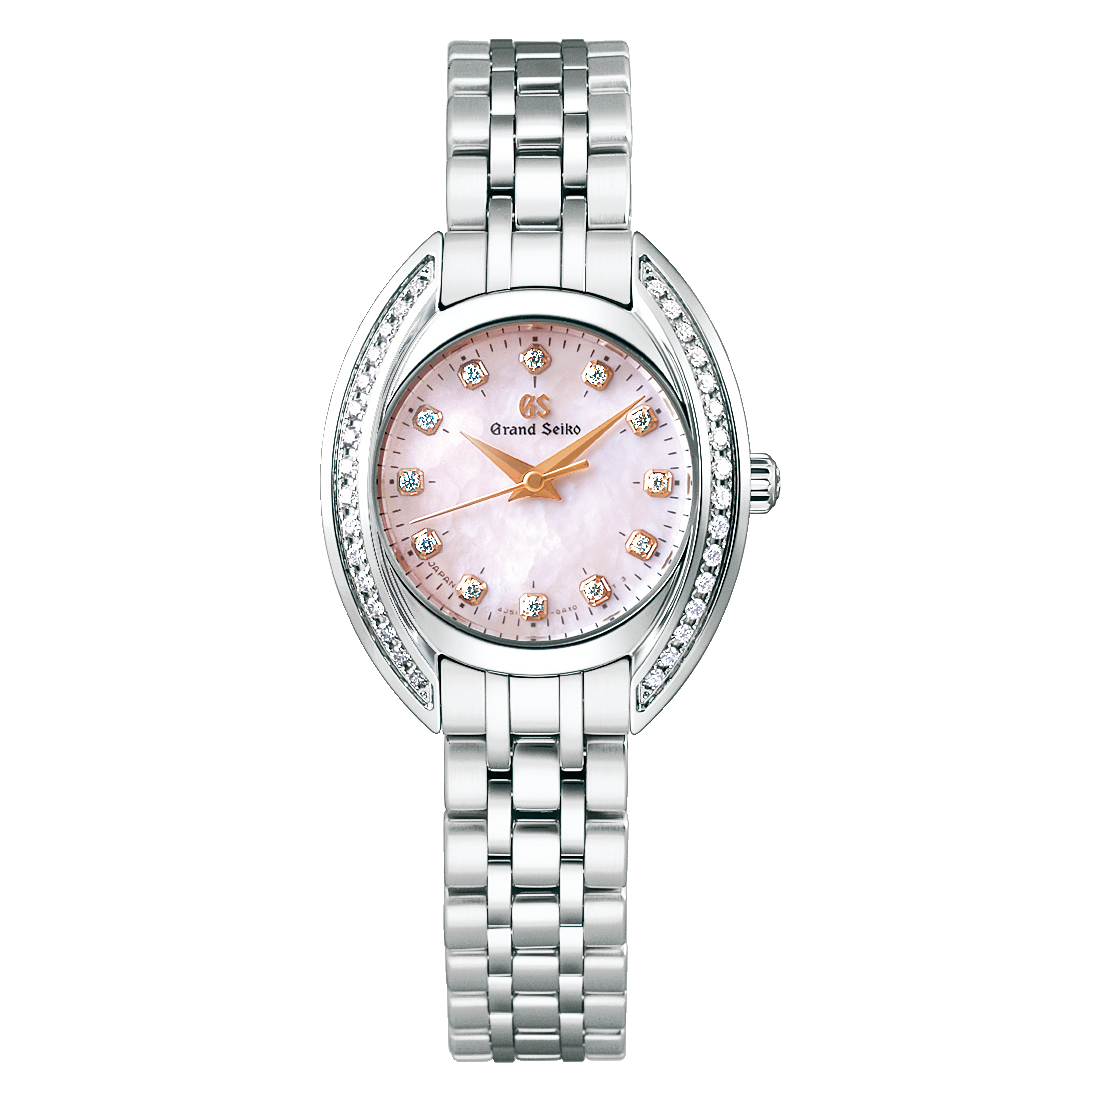 Grand Seiko Elegance Collection STGF351 Battery-powered quartz watch - IPPO JAPAN WATCH 